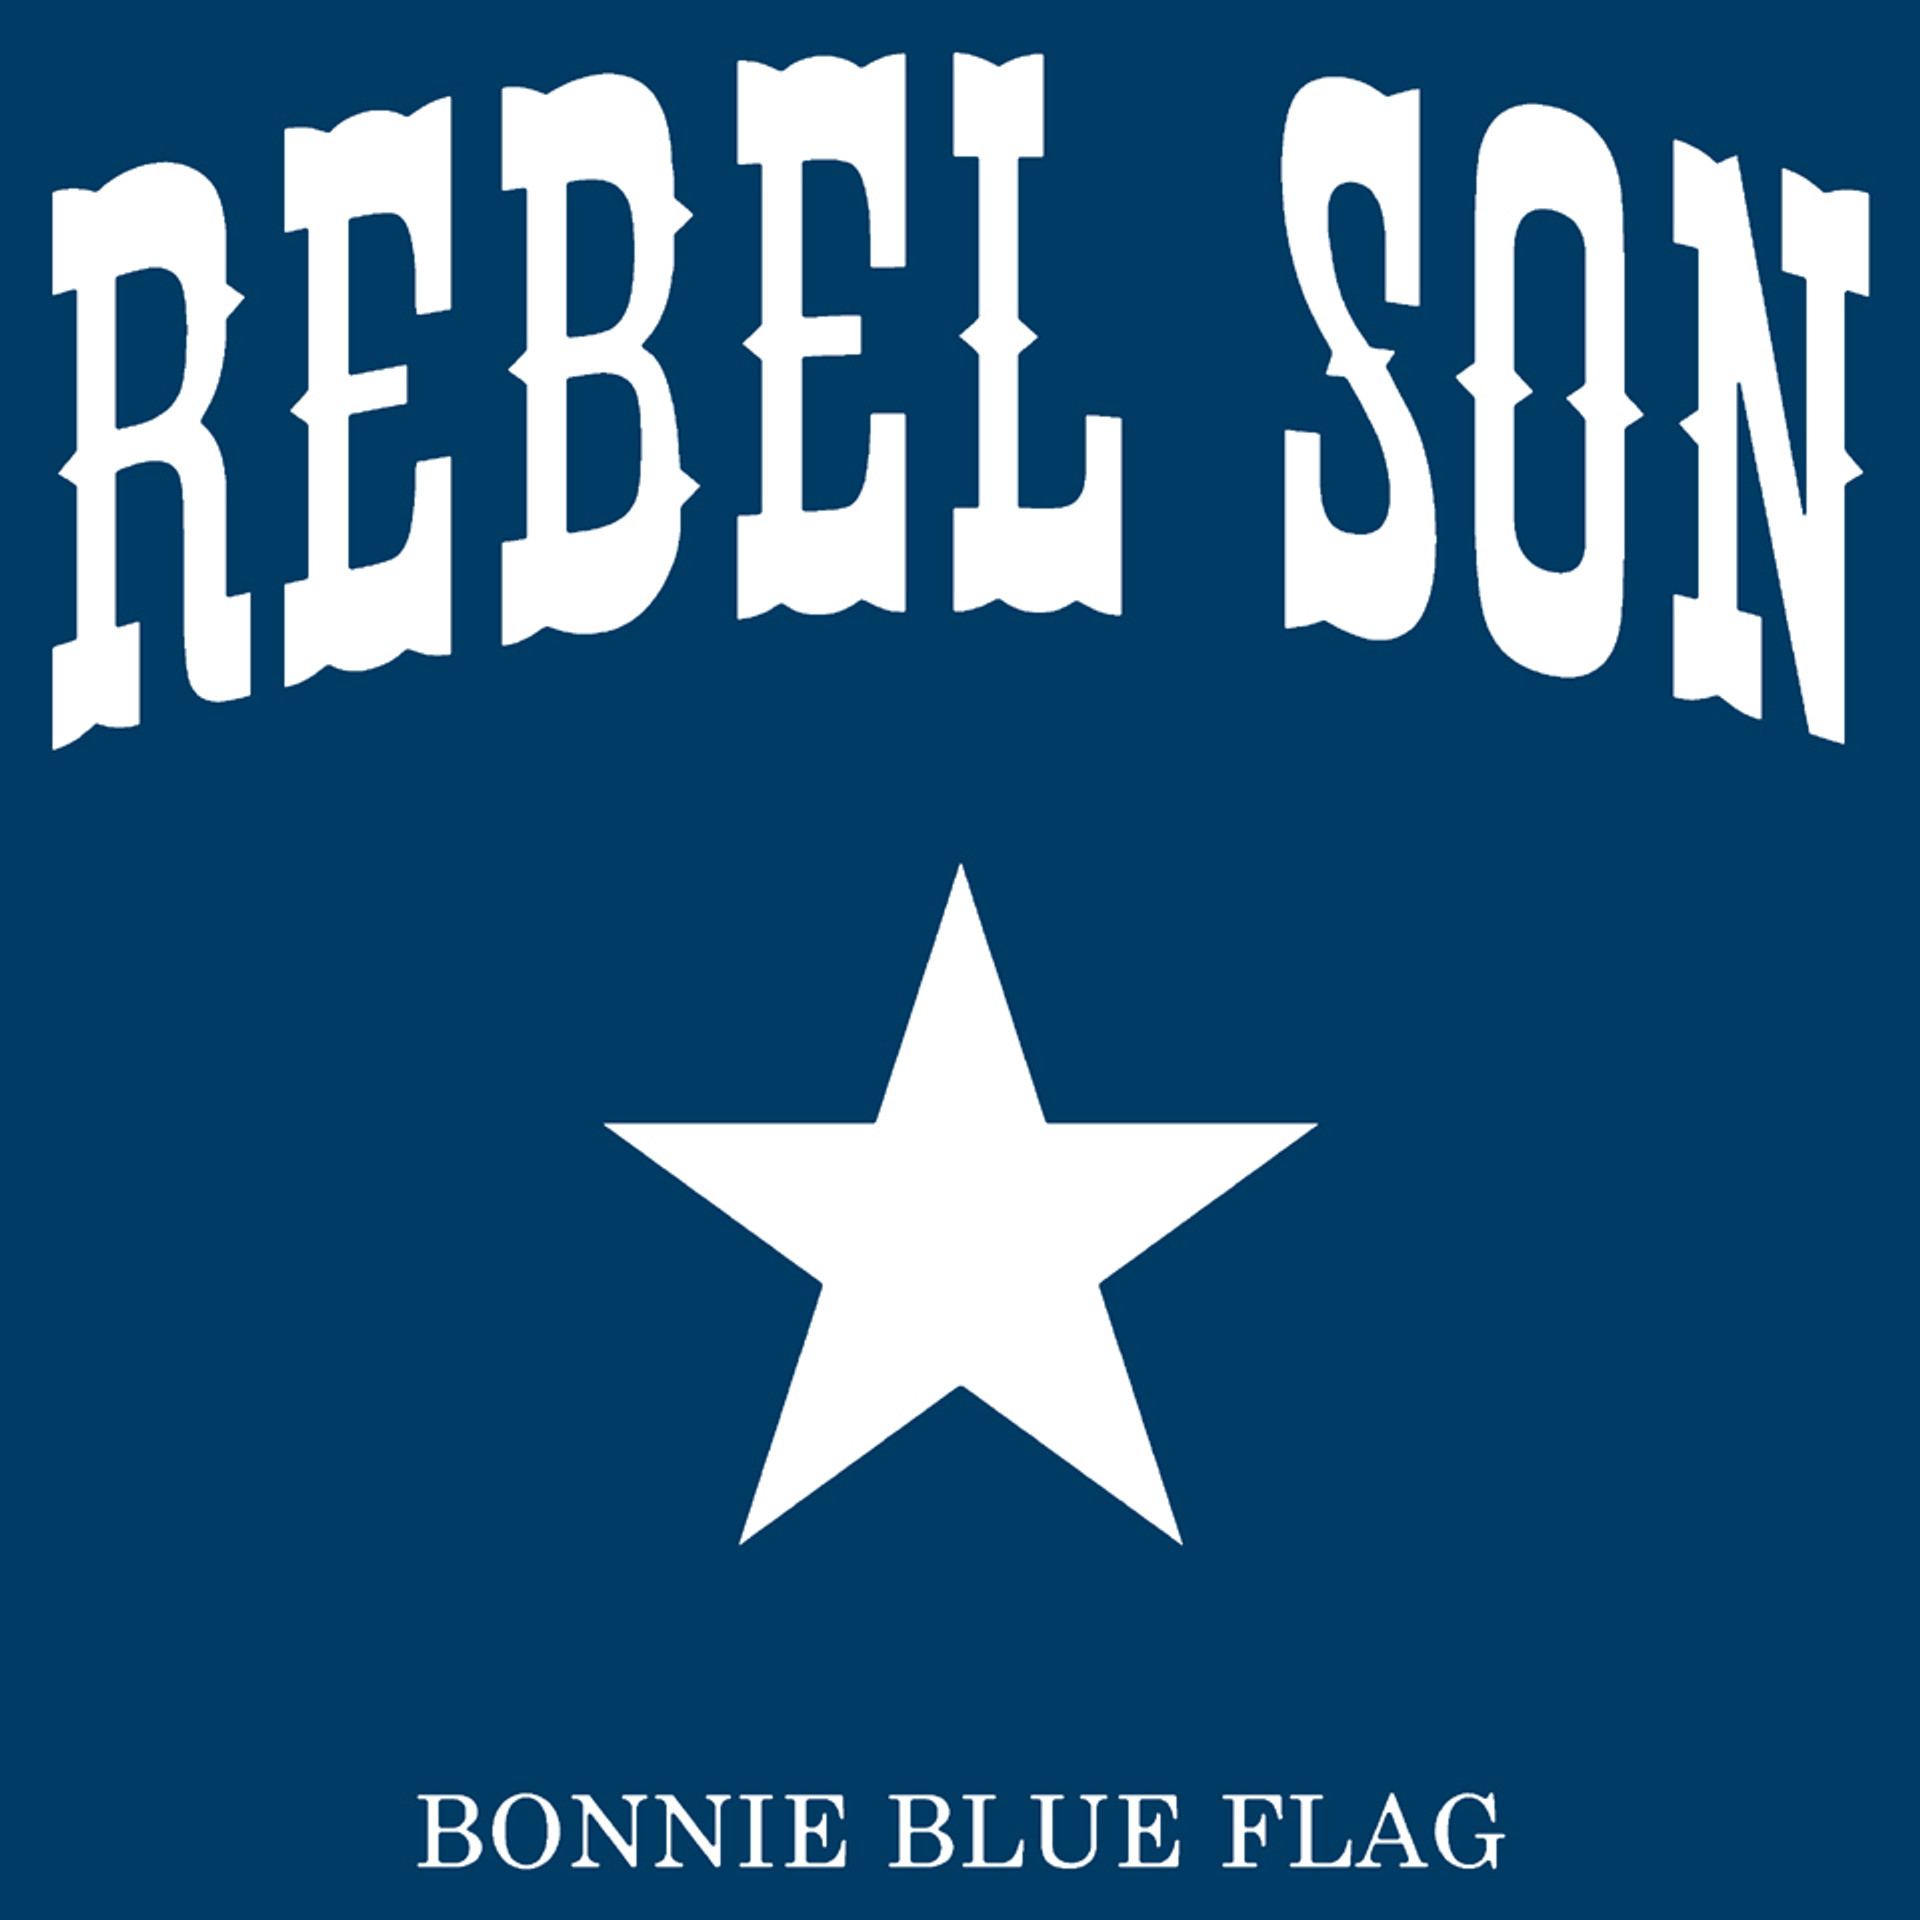 Бонни блу видео. Бонни Блю флаг. Бонни голубой флаг. Флаг Bonnie Blue. Бонни синий флаг.